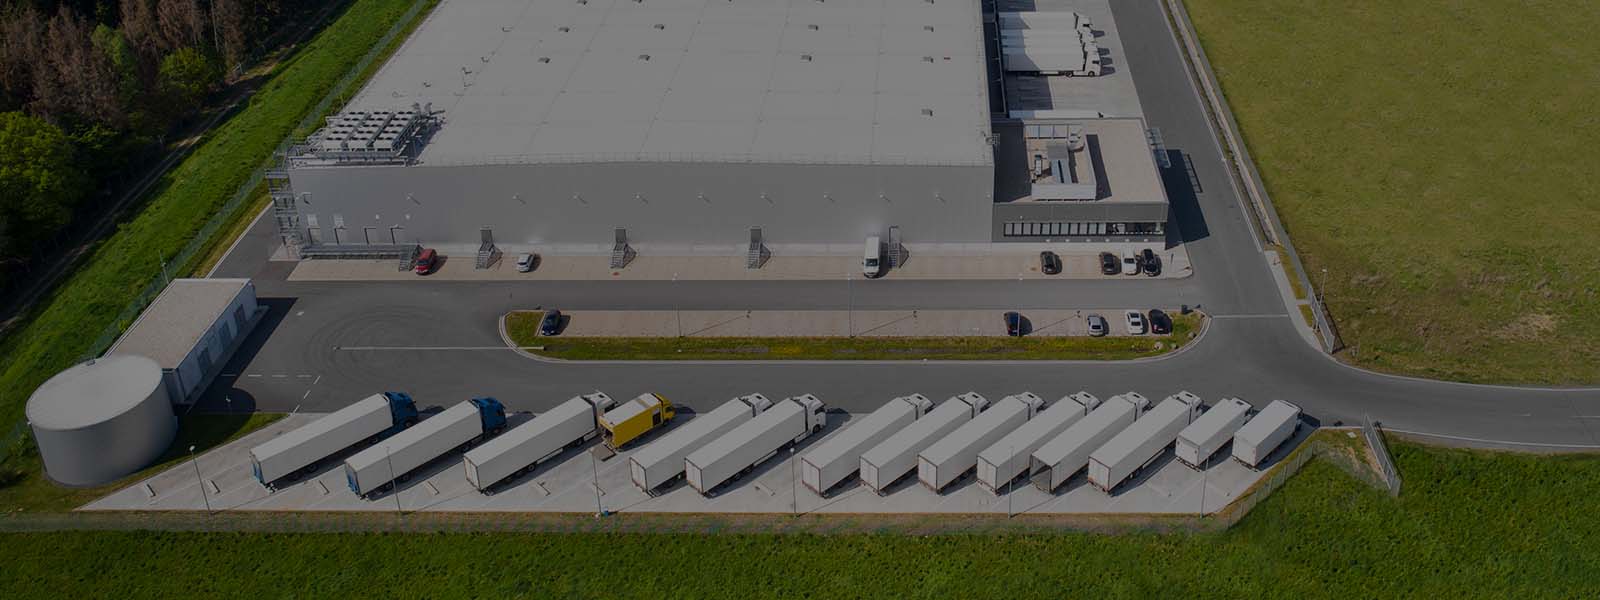 Big logistics company with a number of trucks